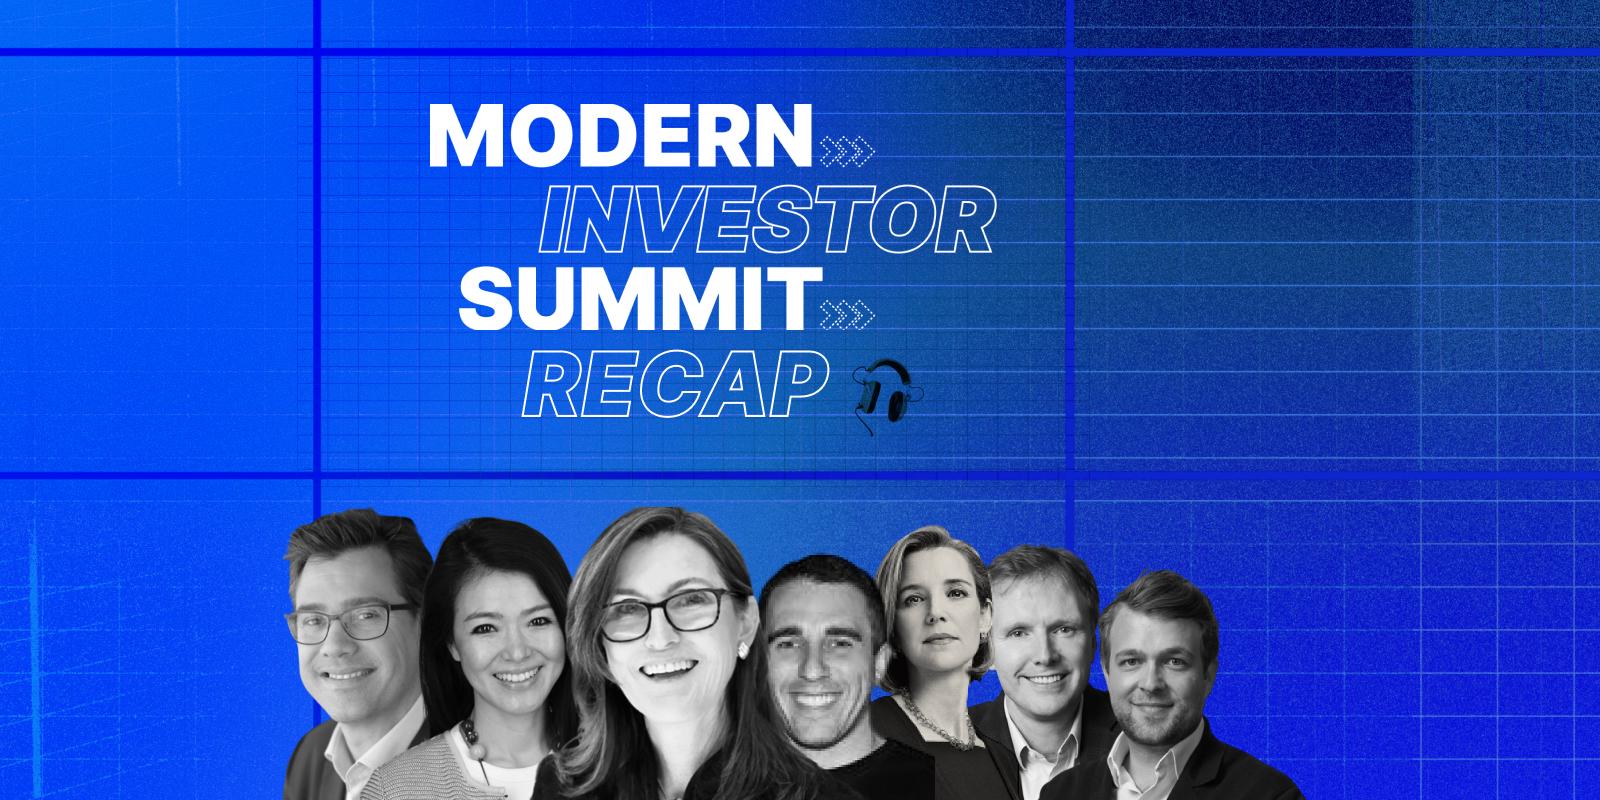 The Modern Investor Summit Recap